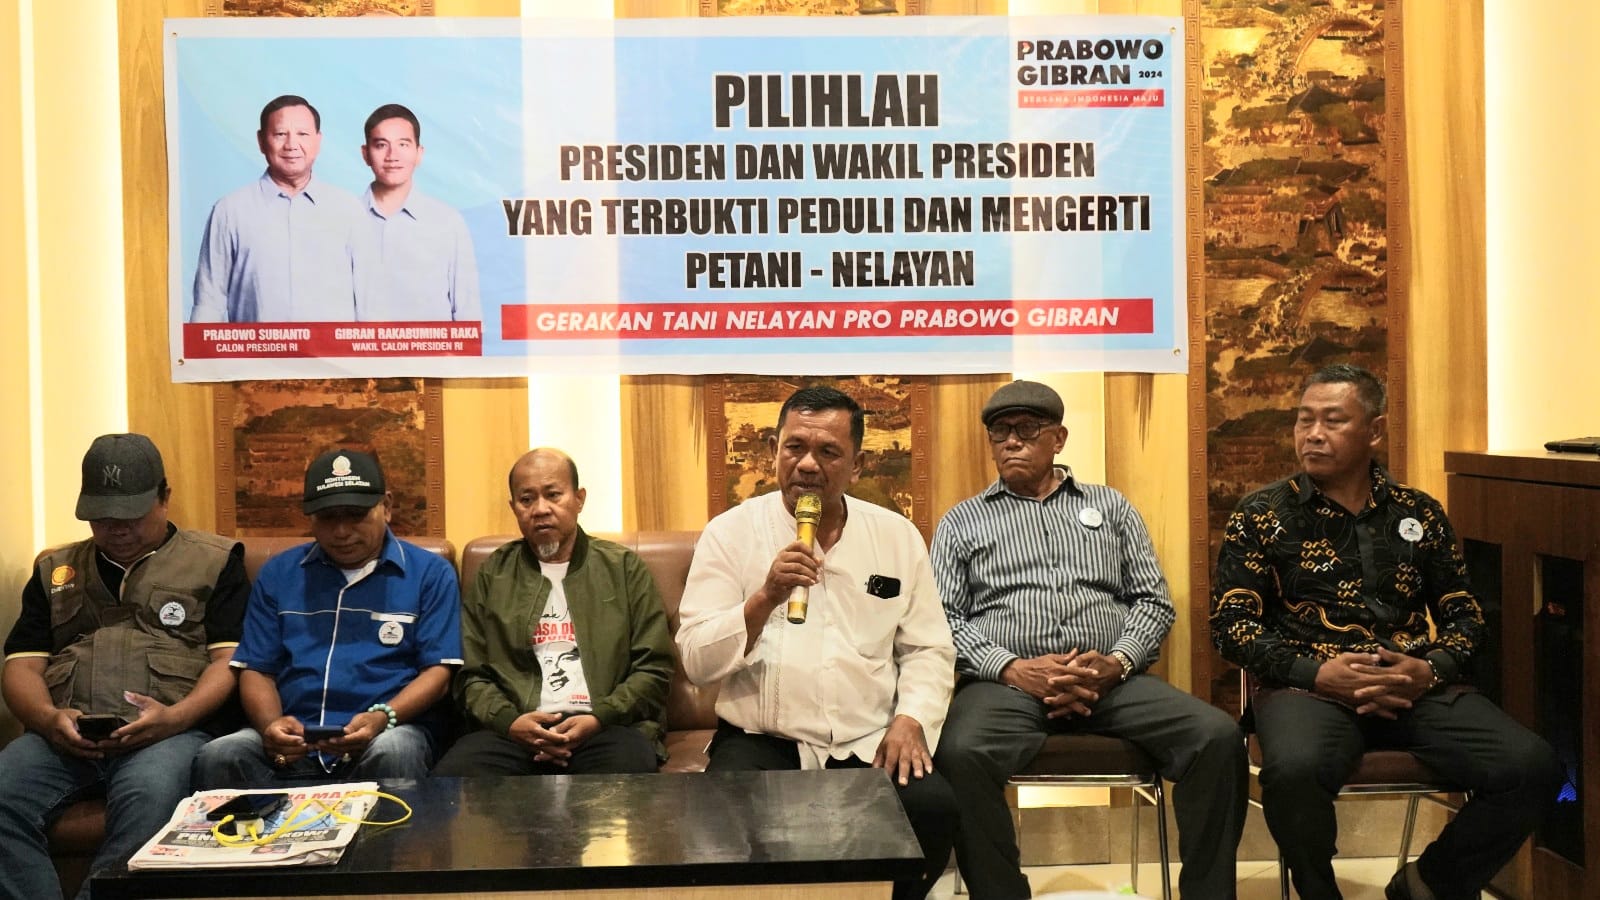 Petani dan Nelayan se Sulsel Deklarasi Dukungan ke Prabowo Gibran